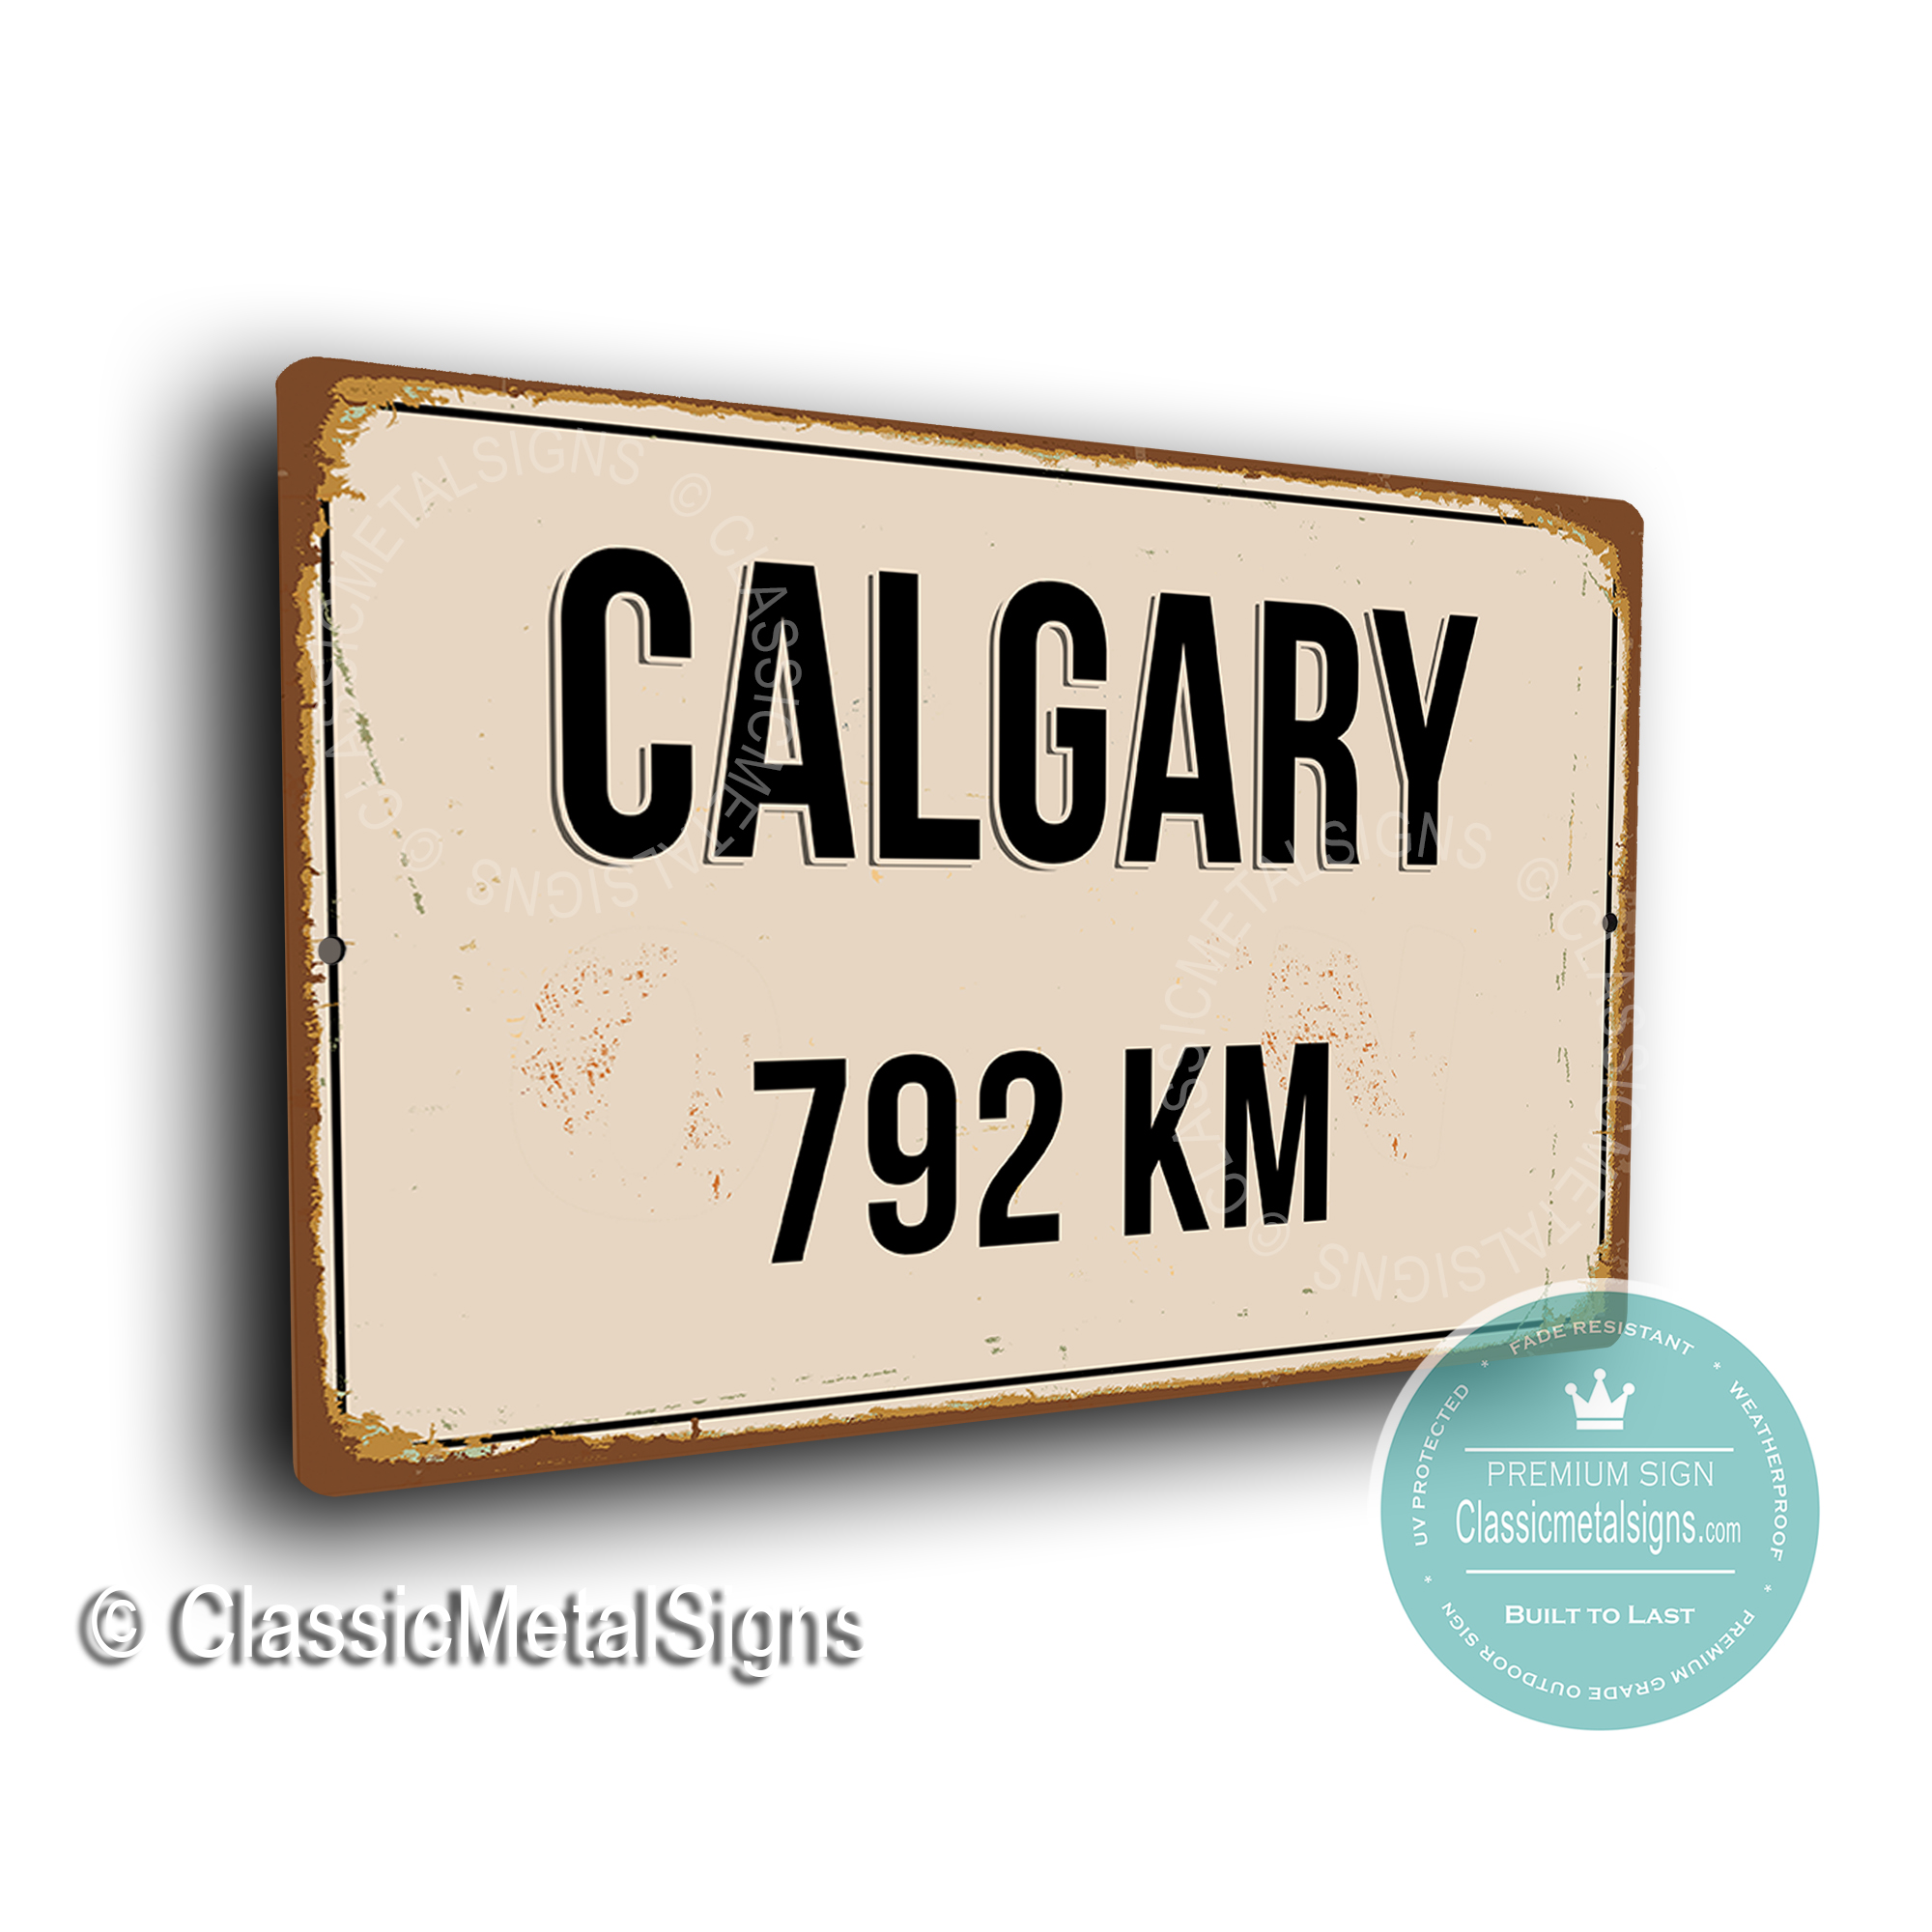 Calgary Street Sign